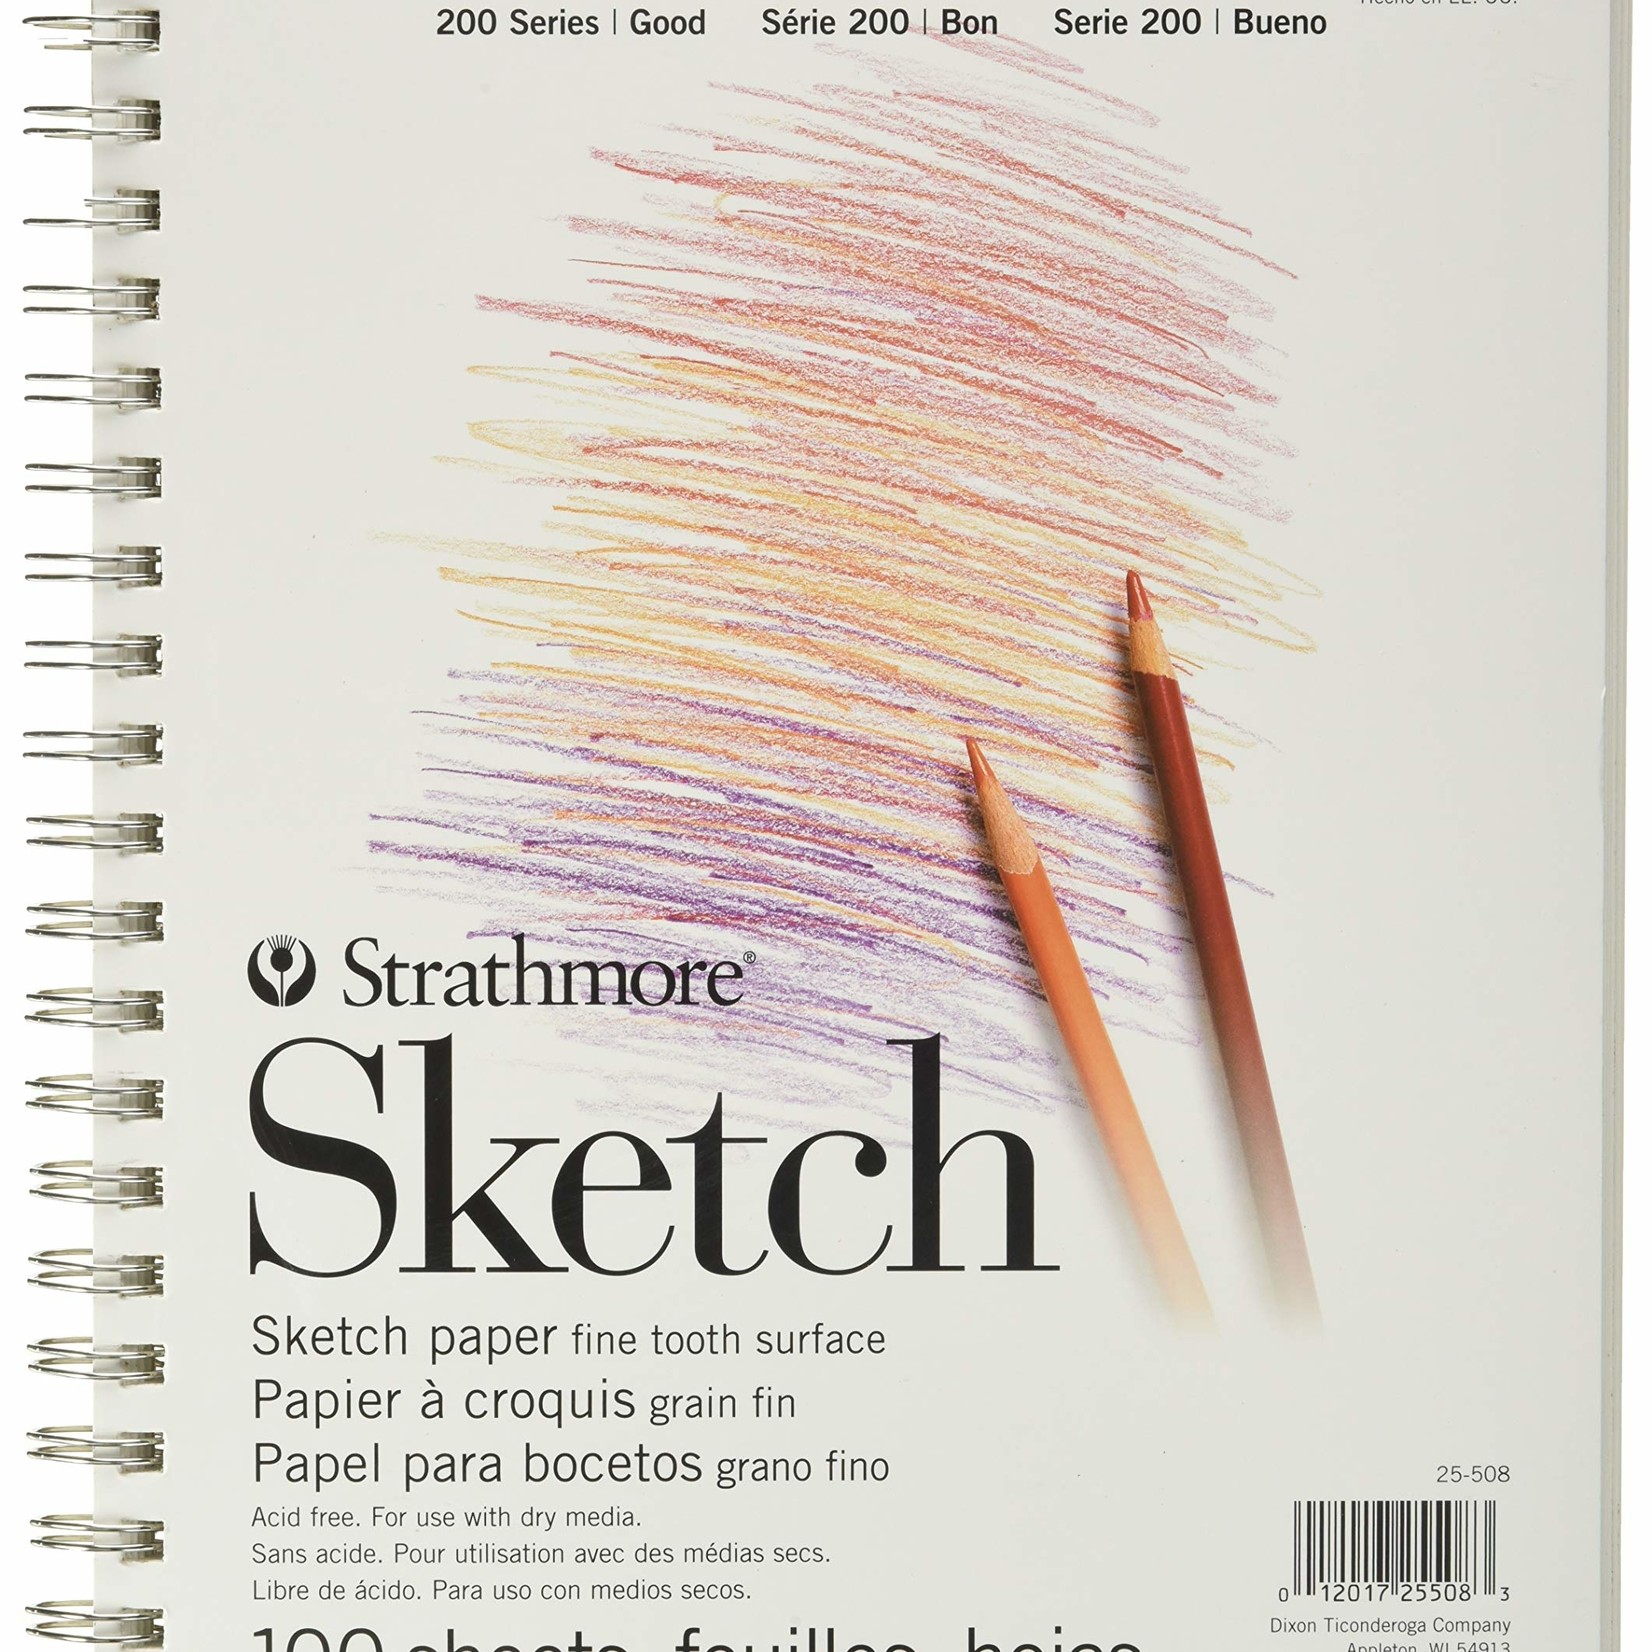 Shop Sketch Paper & Drawing Paper online at Modulor